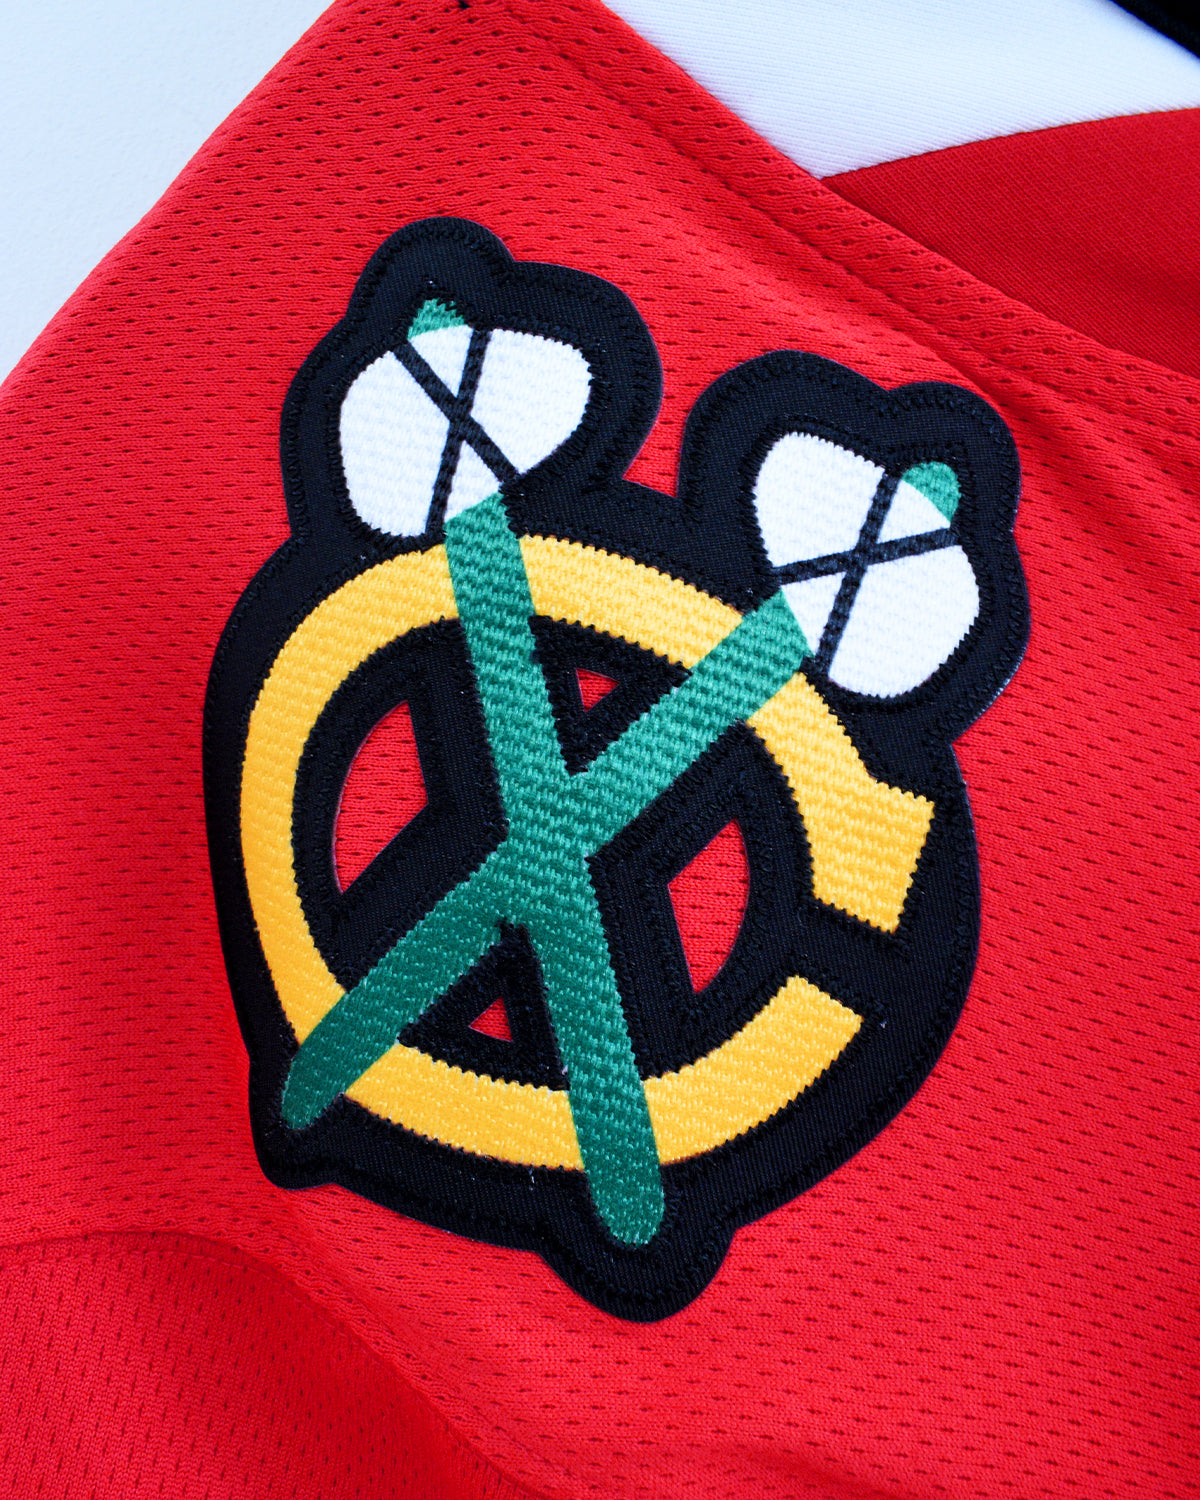 Blackhawks logo jersey